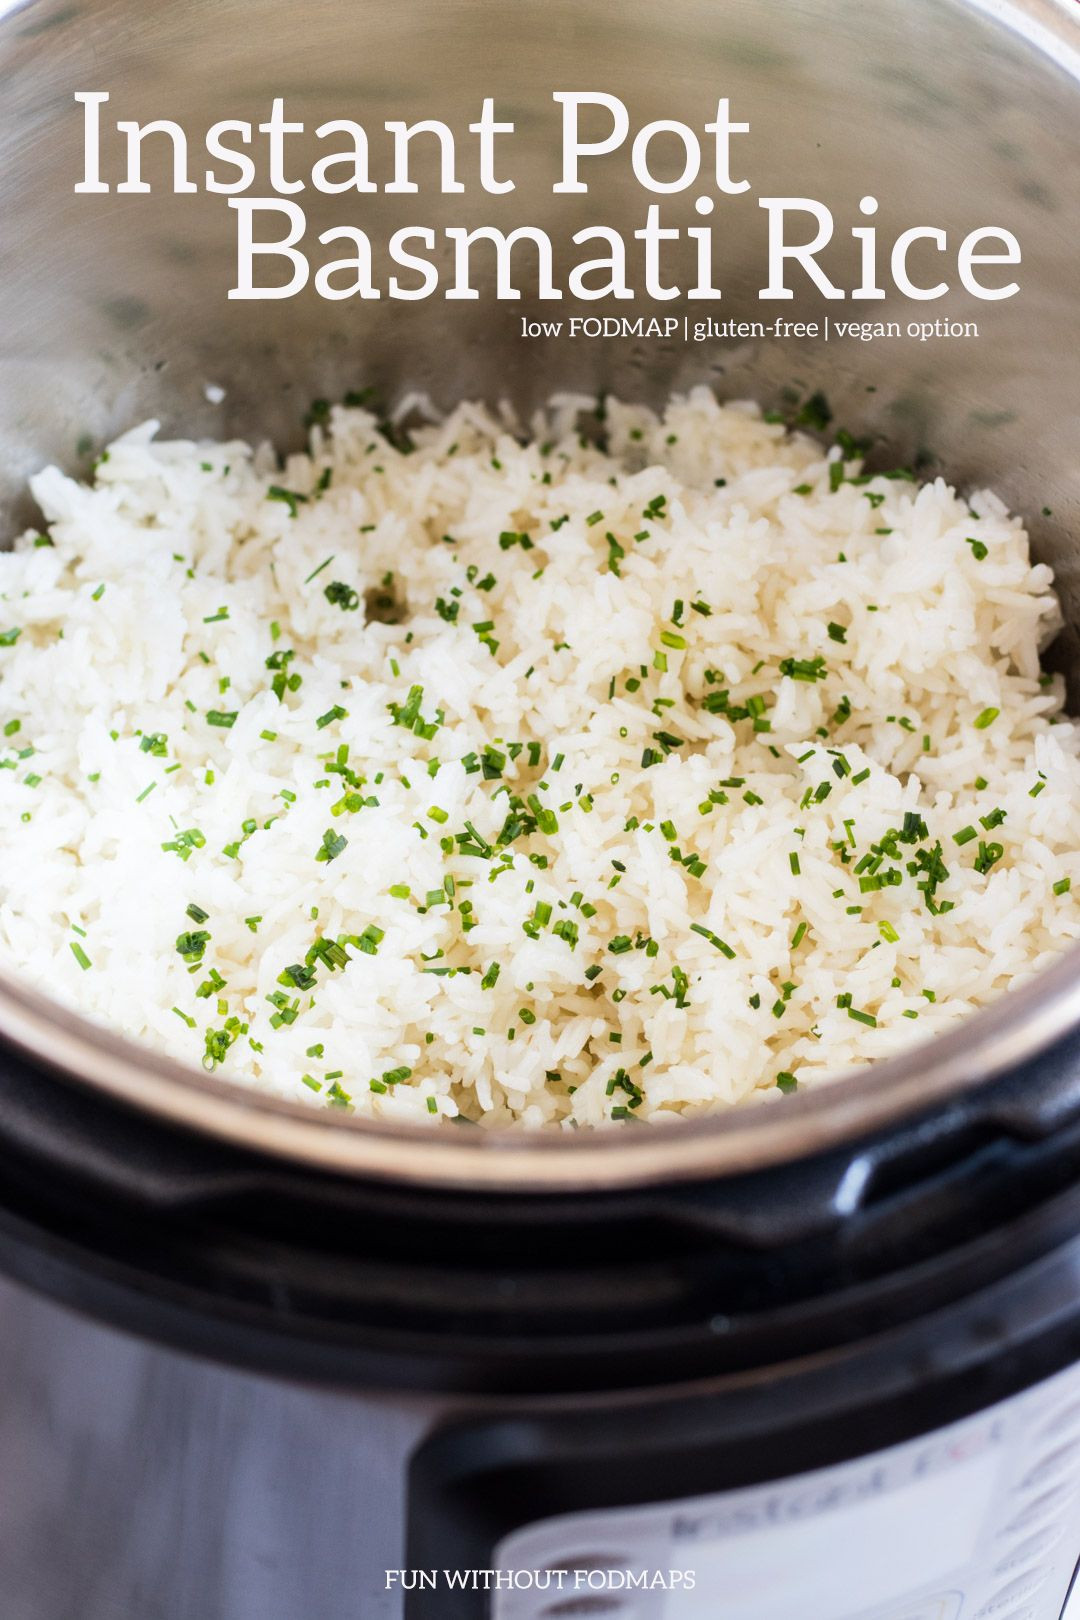 Low Fodmap Instant Pot Recipes
 Instant Pot Low FODMAP Basmati Rice Recipe